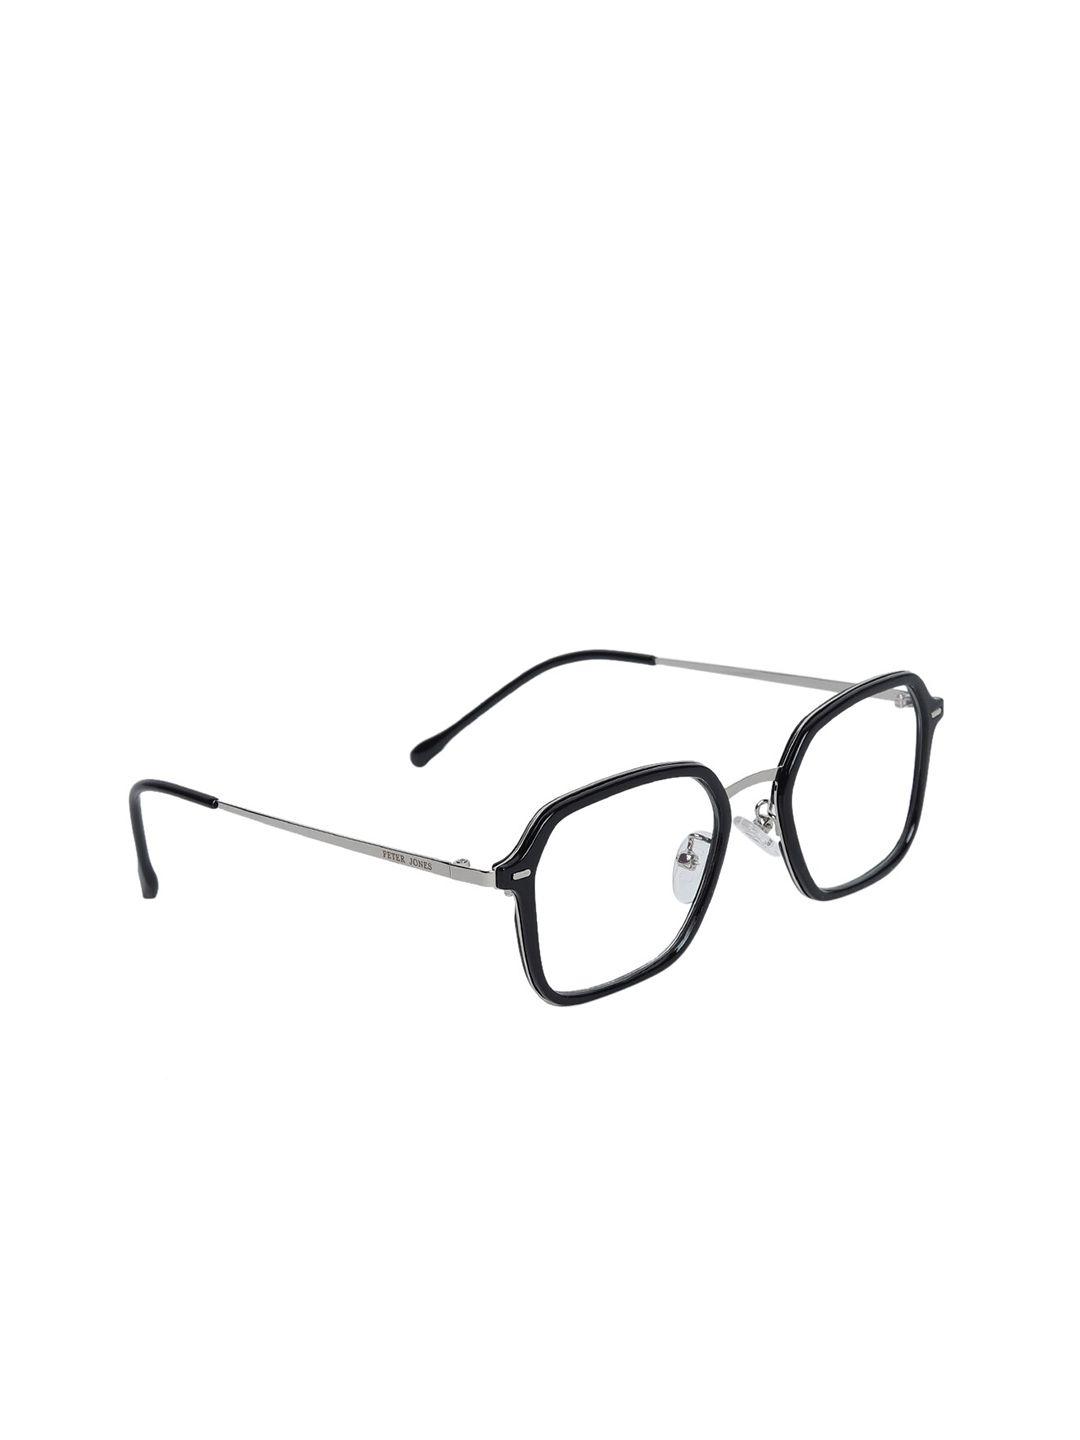 peter jones eyewear unisex black & silver-toned square blue light blocking glasses